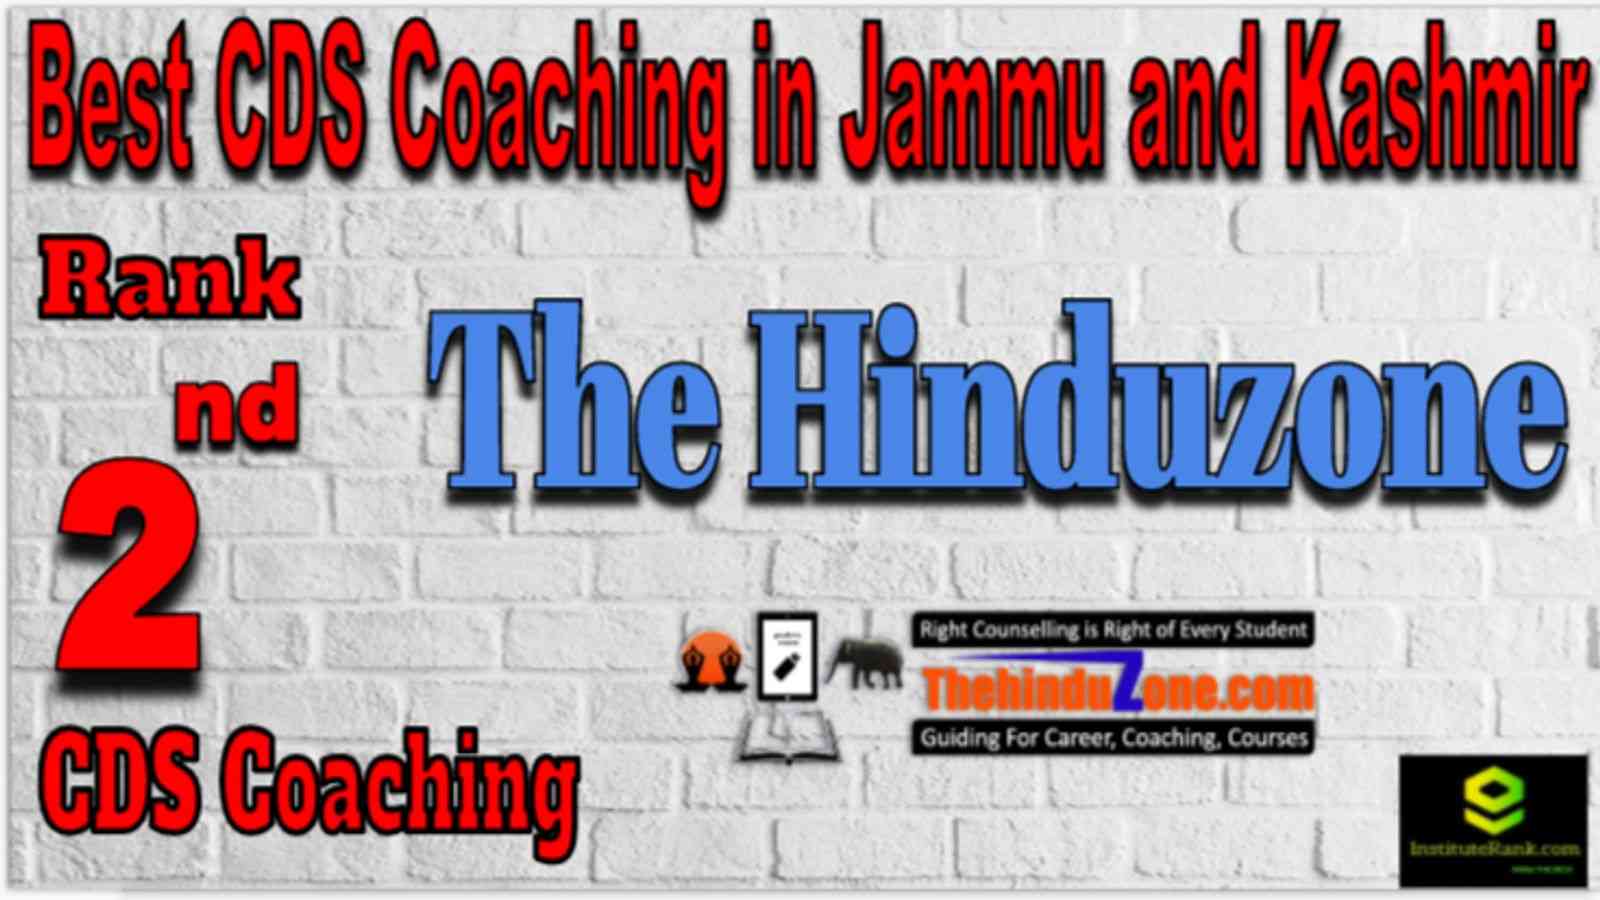 Rank 2 Best CDS Coaching in Jammu and Kashmir